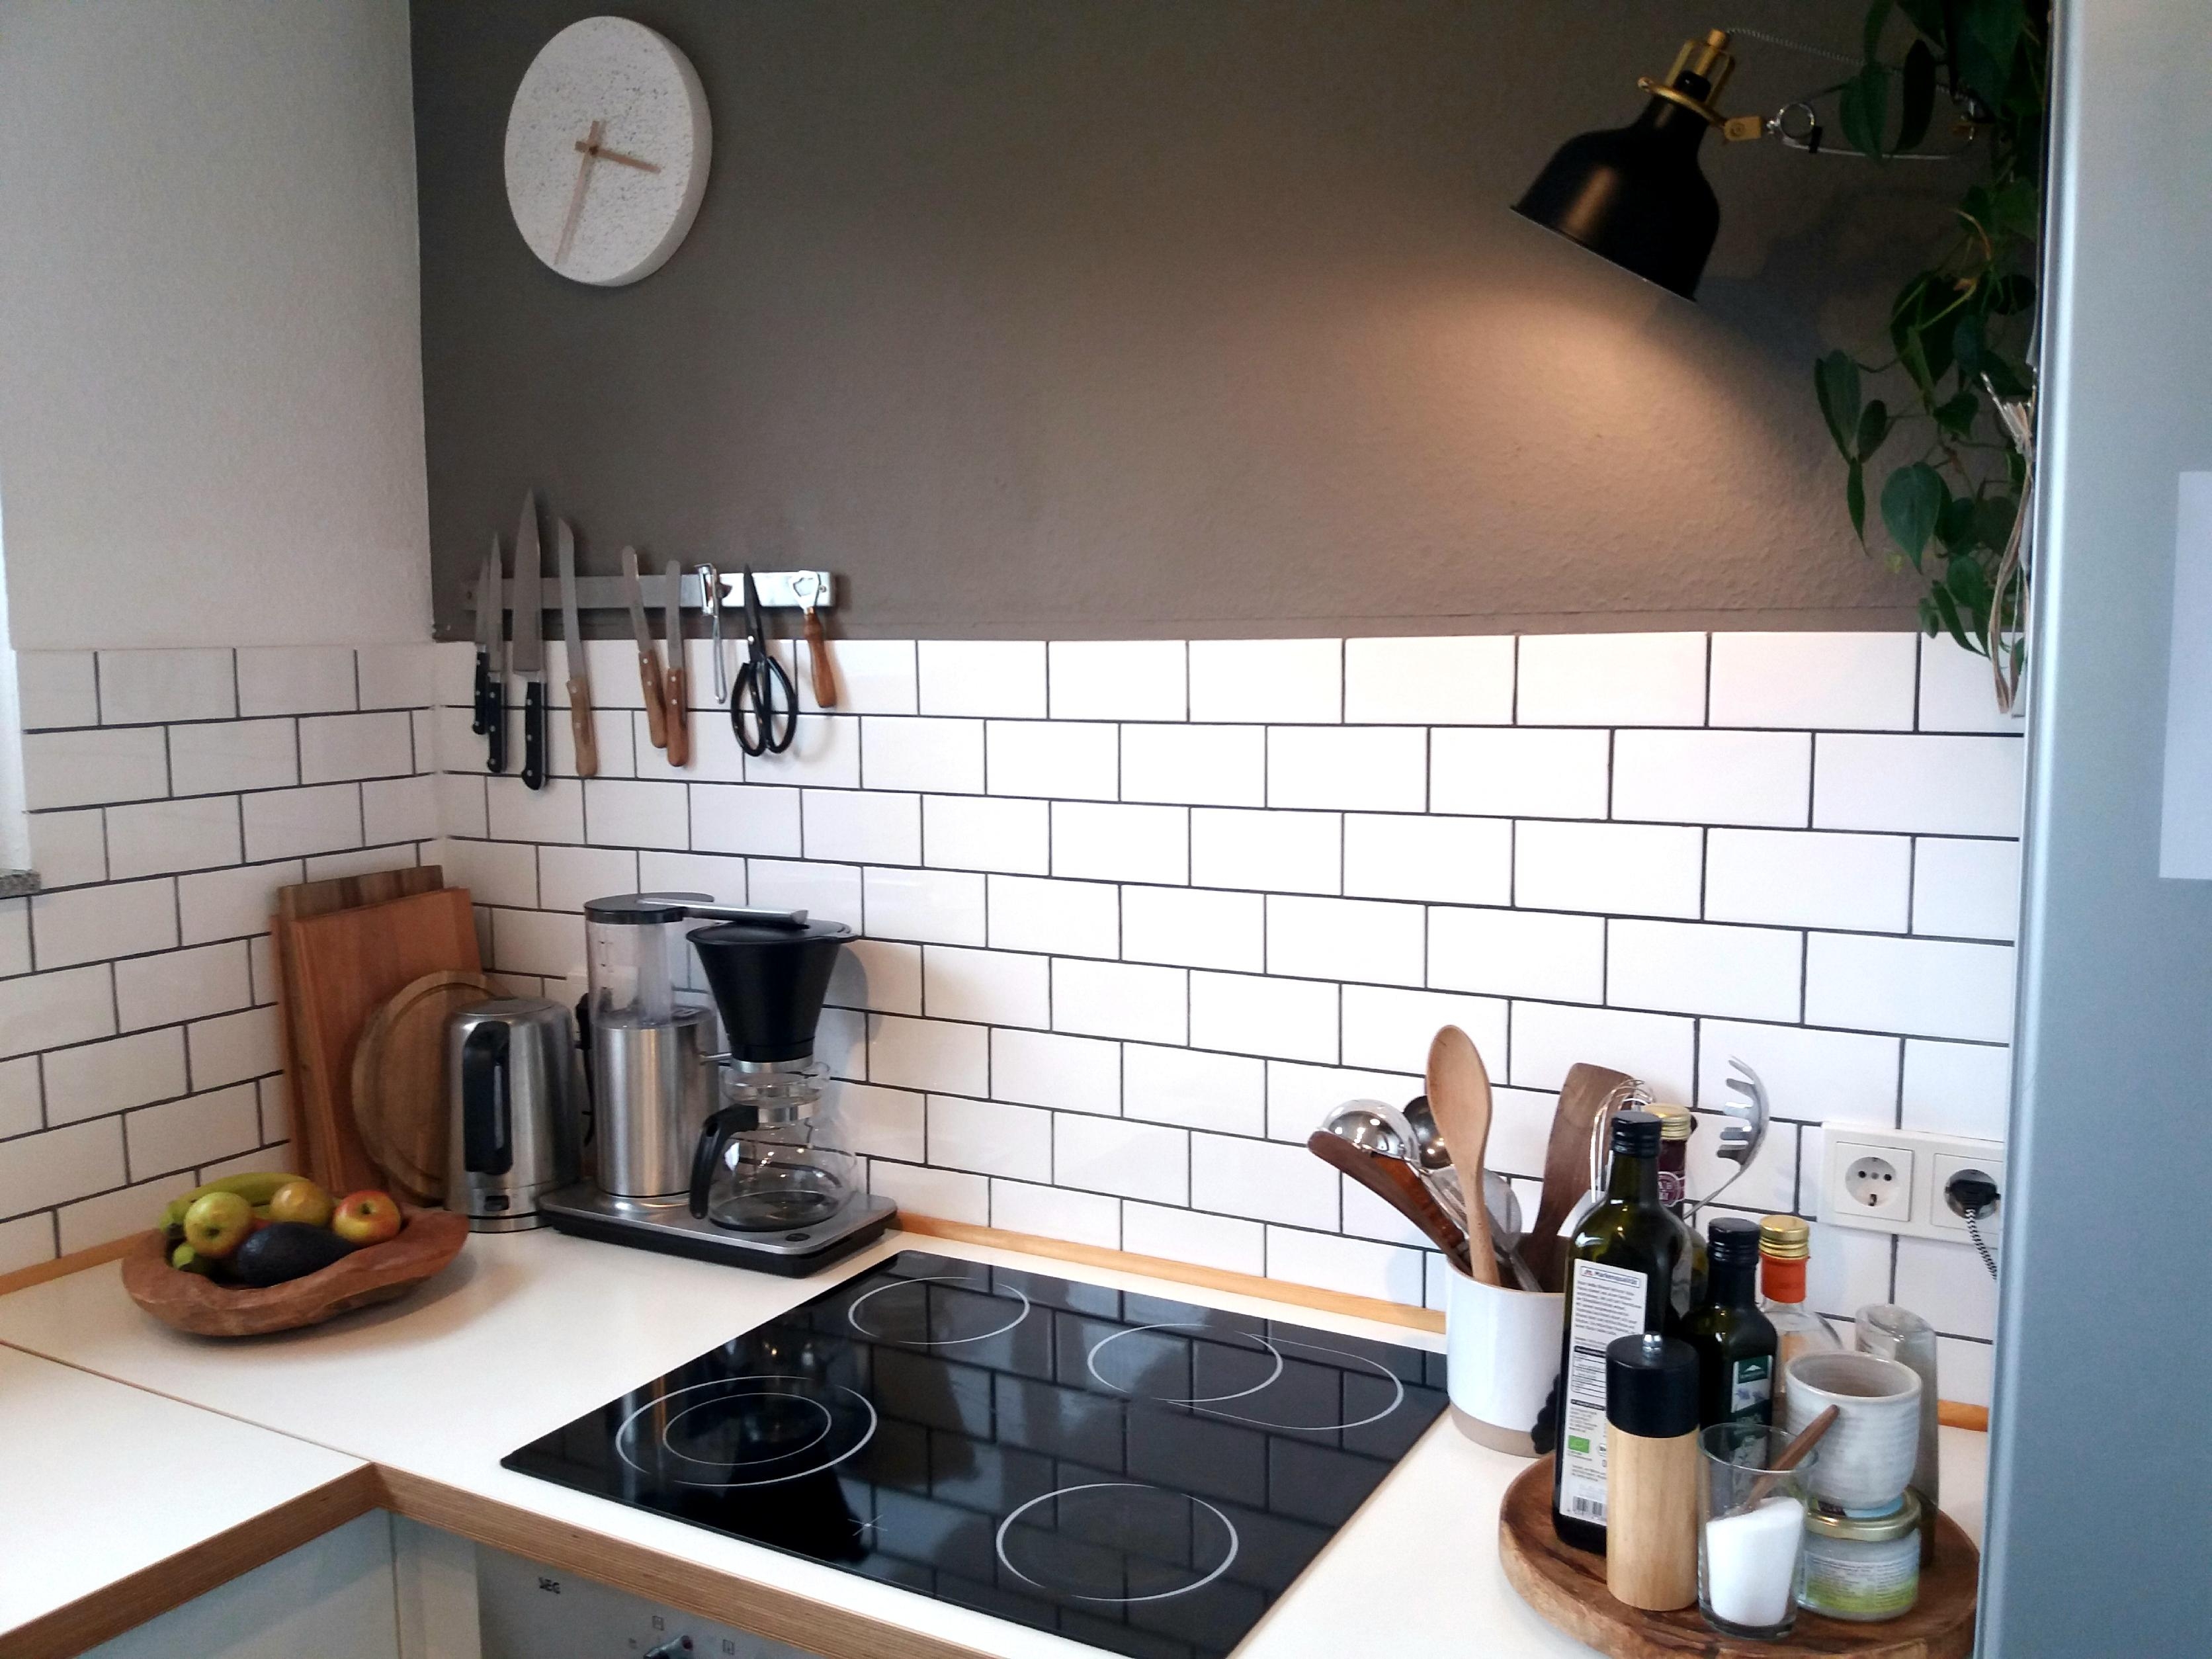 #scandi #küche #metrofliesen #minimalist #ikea #diy #fliesenspiegel
#kaffee 